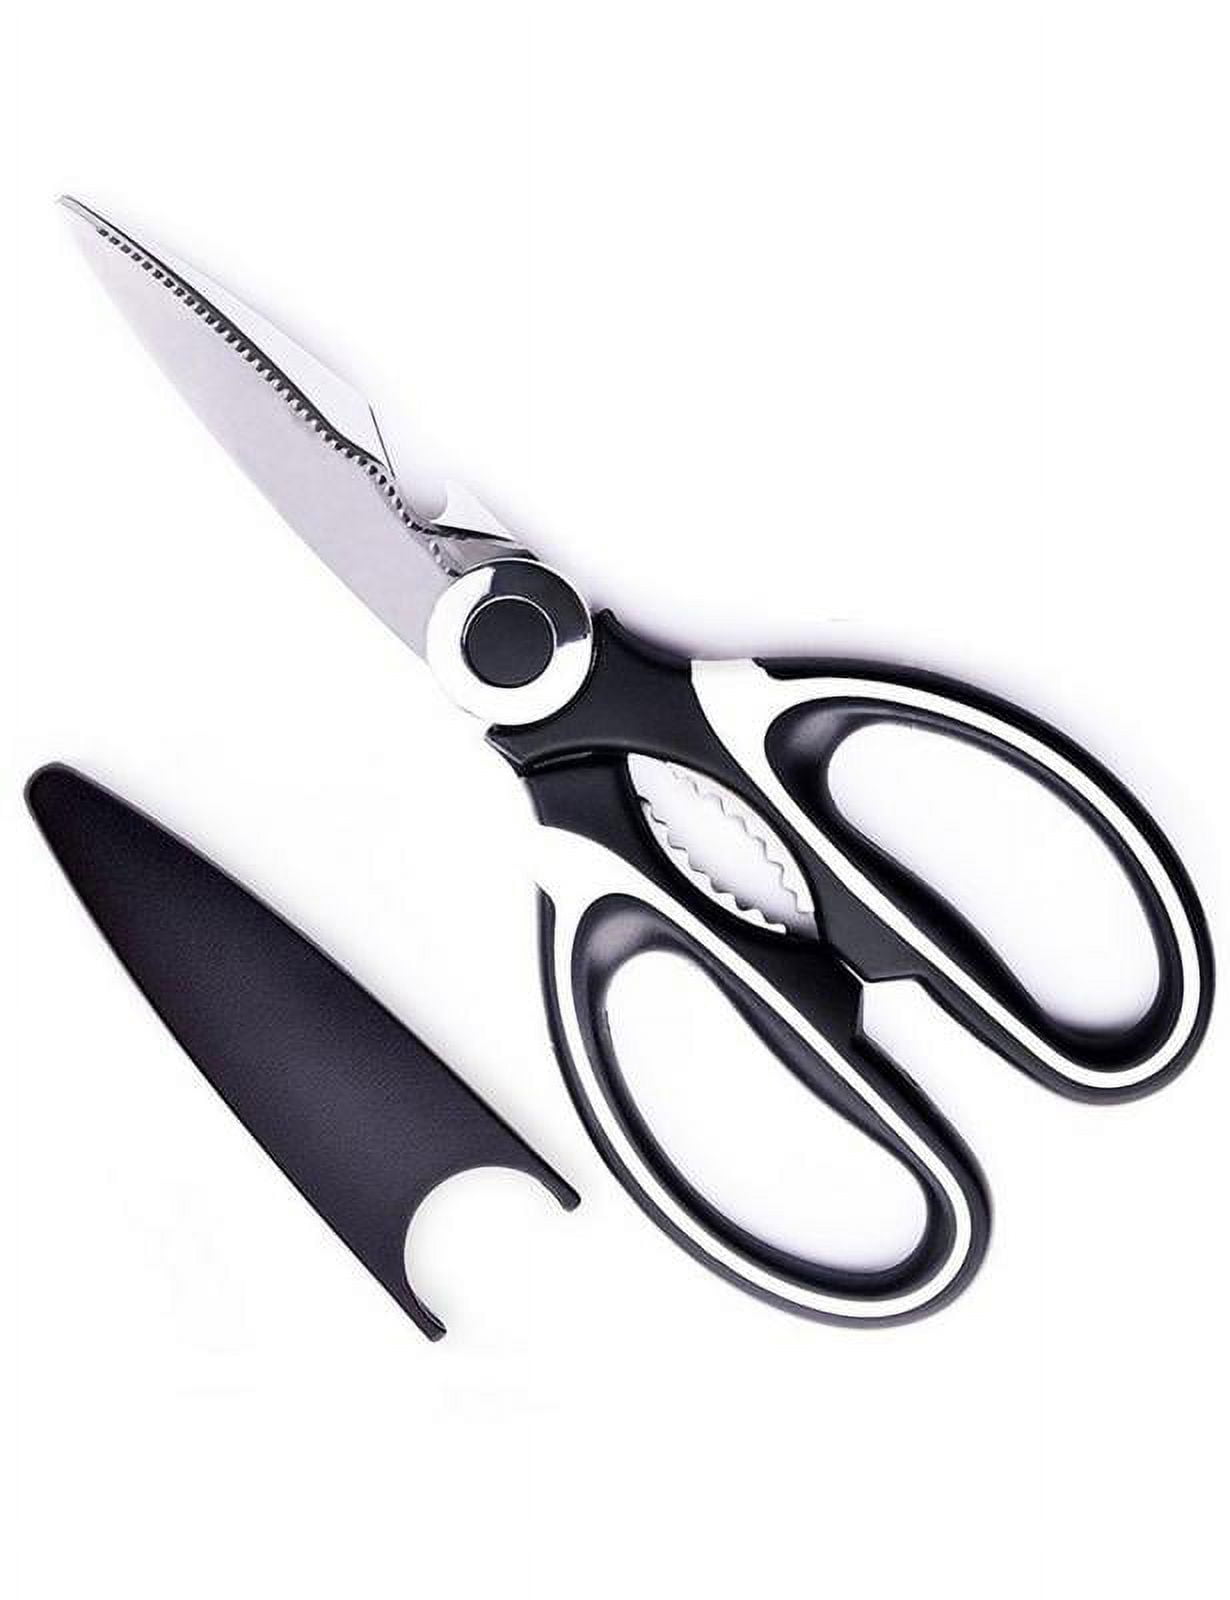  TECHEF Kitchen Shears, All Purpose Scissors, Dishwasher Safe,  Heavy Duty Meat Scissors Poultry Shears, Stainless Steel, Made in Korea  (Dark Gray) : Home & Kitchen